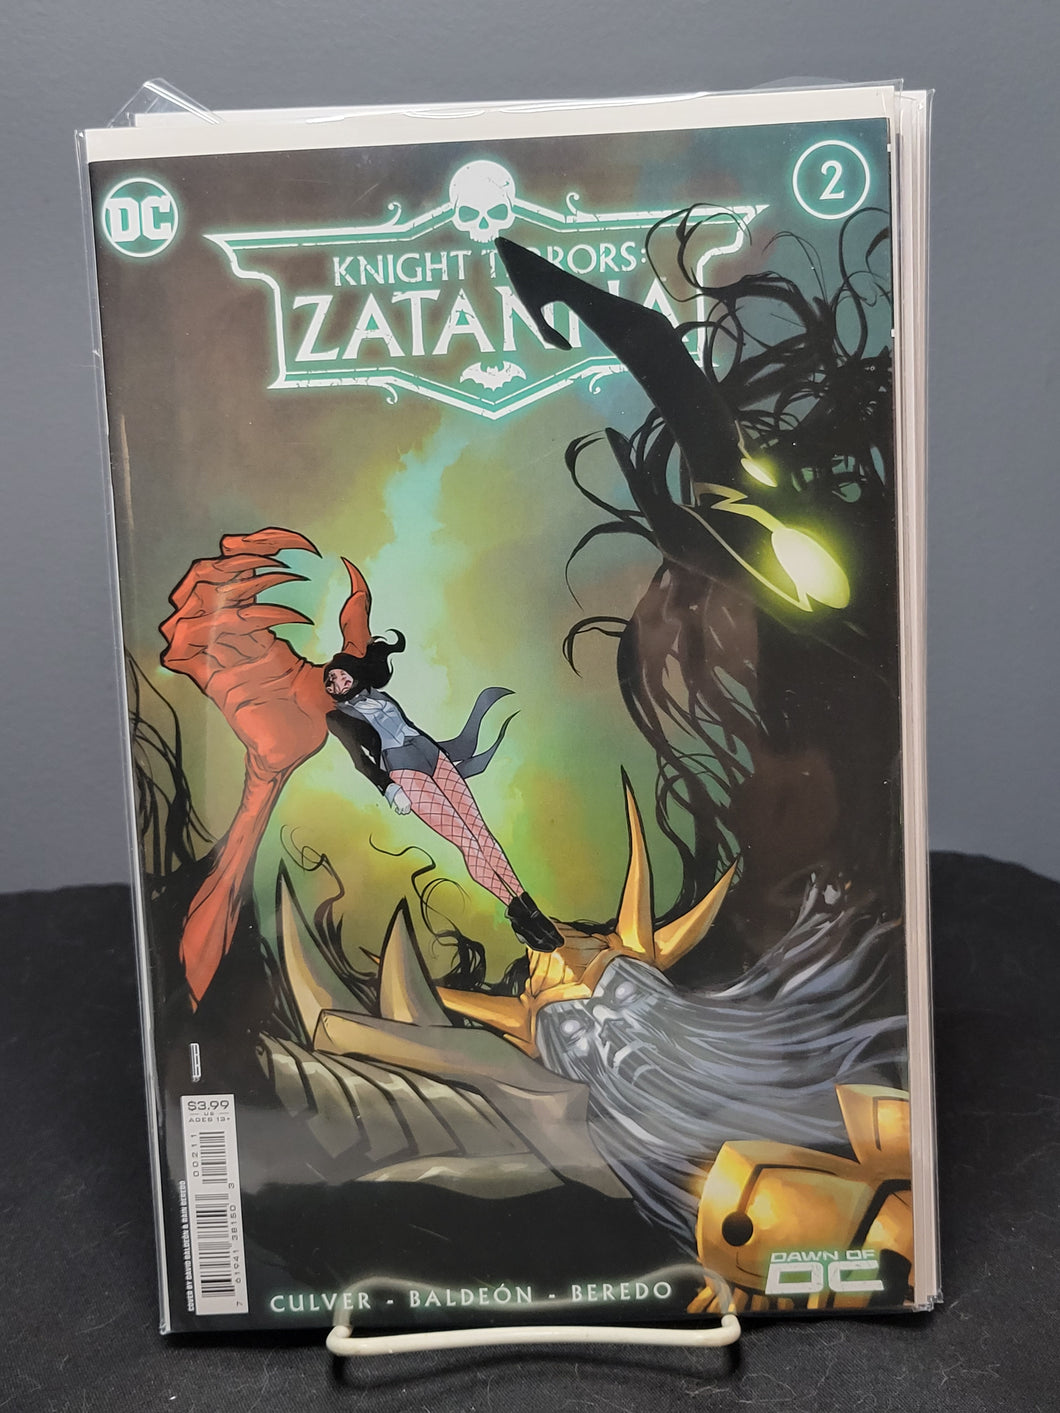 Knight Terrors: Zatanna #2